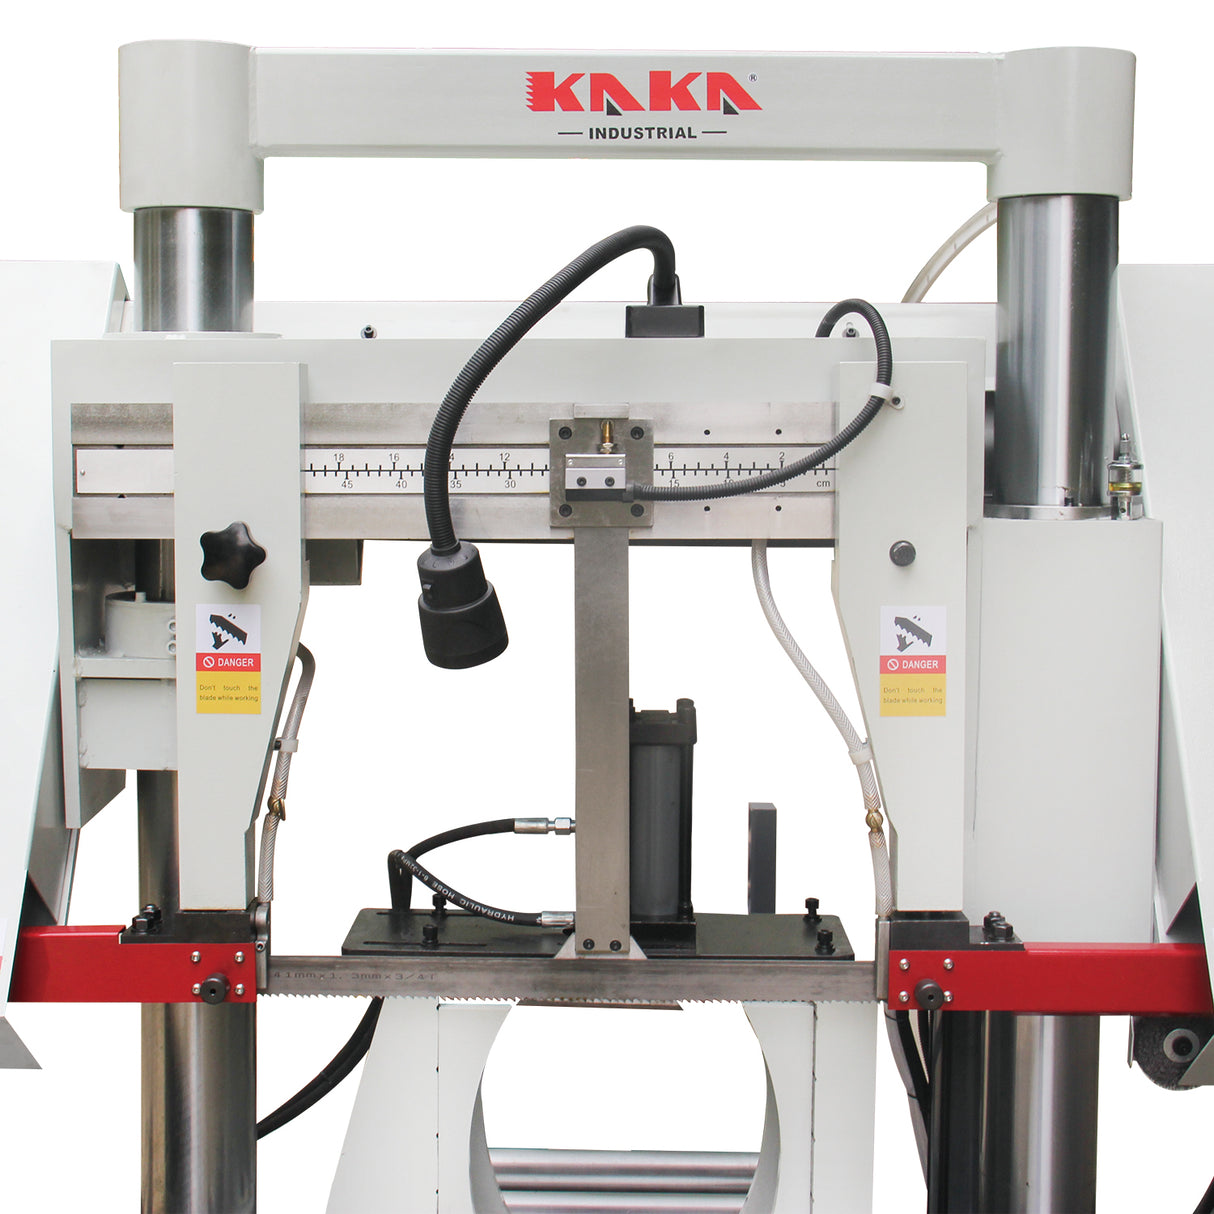 Kaka Industrial TGK-16A Double column horizontal band saw, Max cutting capacity 15.7 inch, vertical lifting, high stability. Cutting speed adopts hydraulic control, 230V 60HZ 3PH